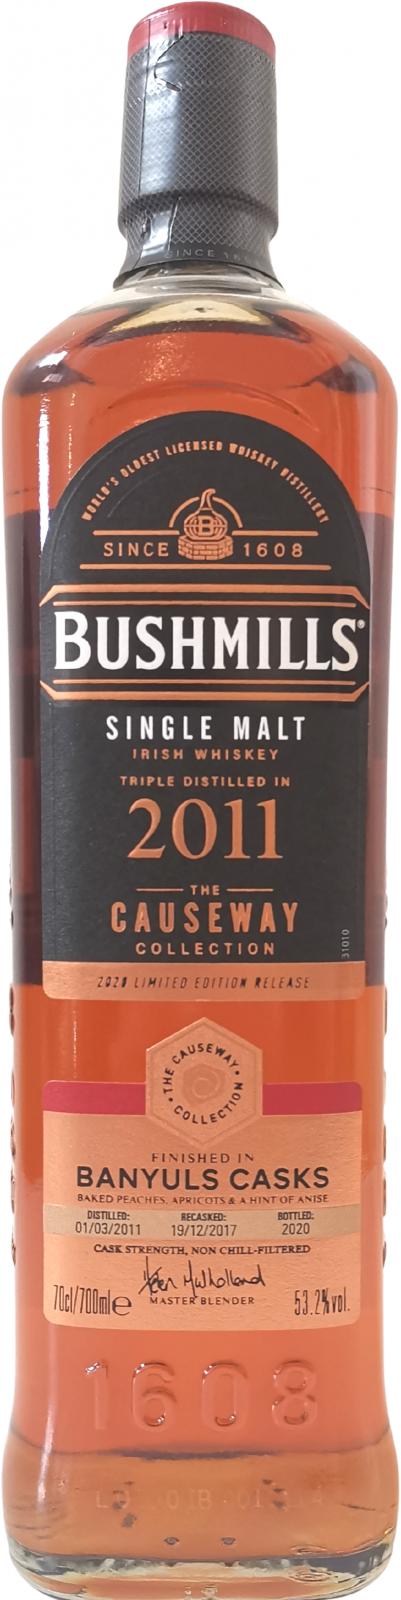 Bushmills 2011